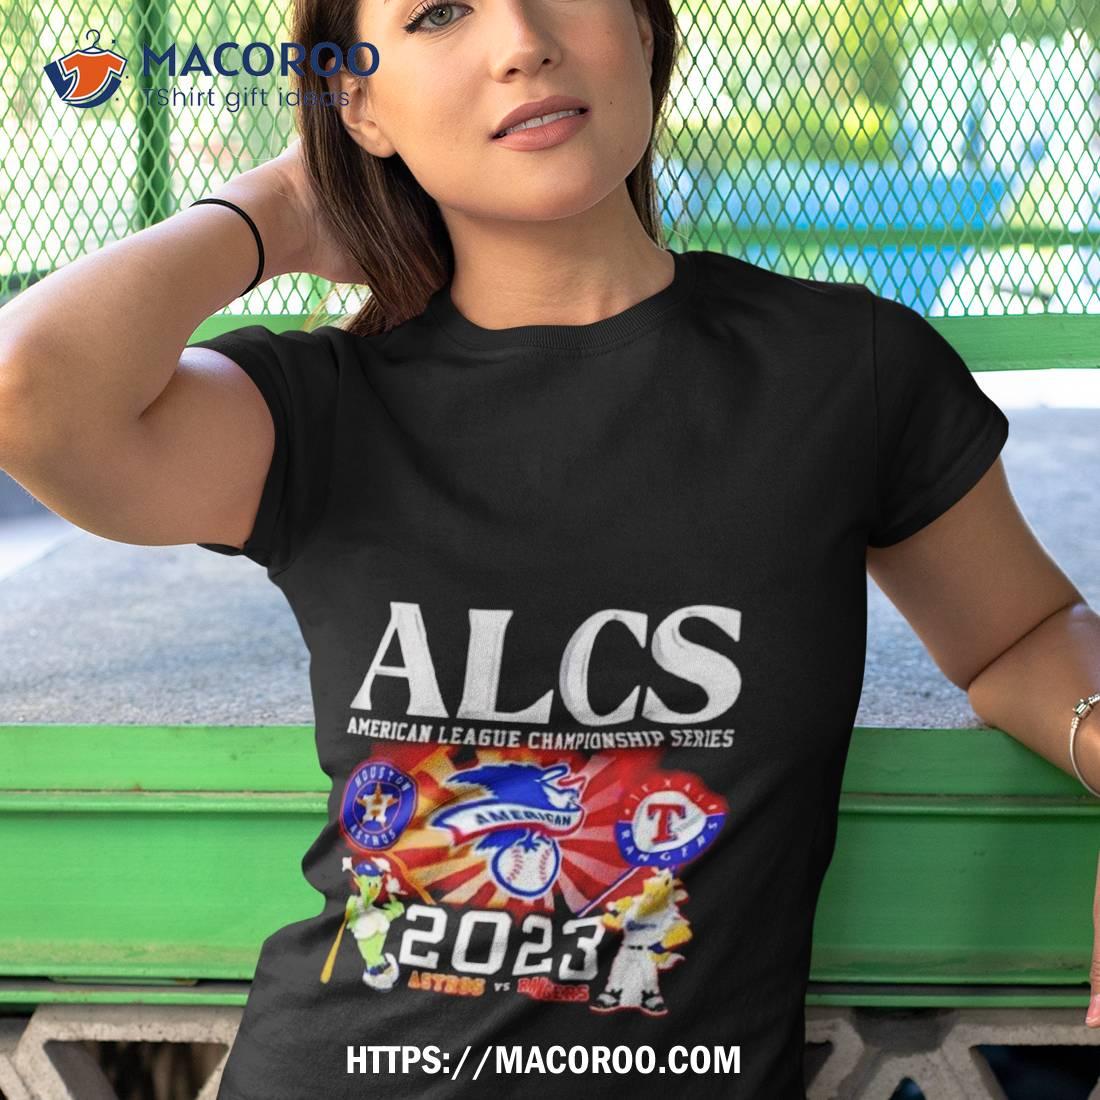 alcs championship shirts